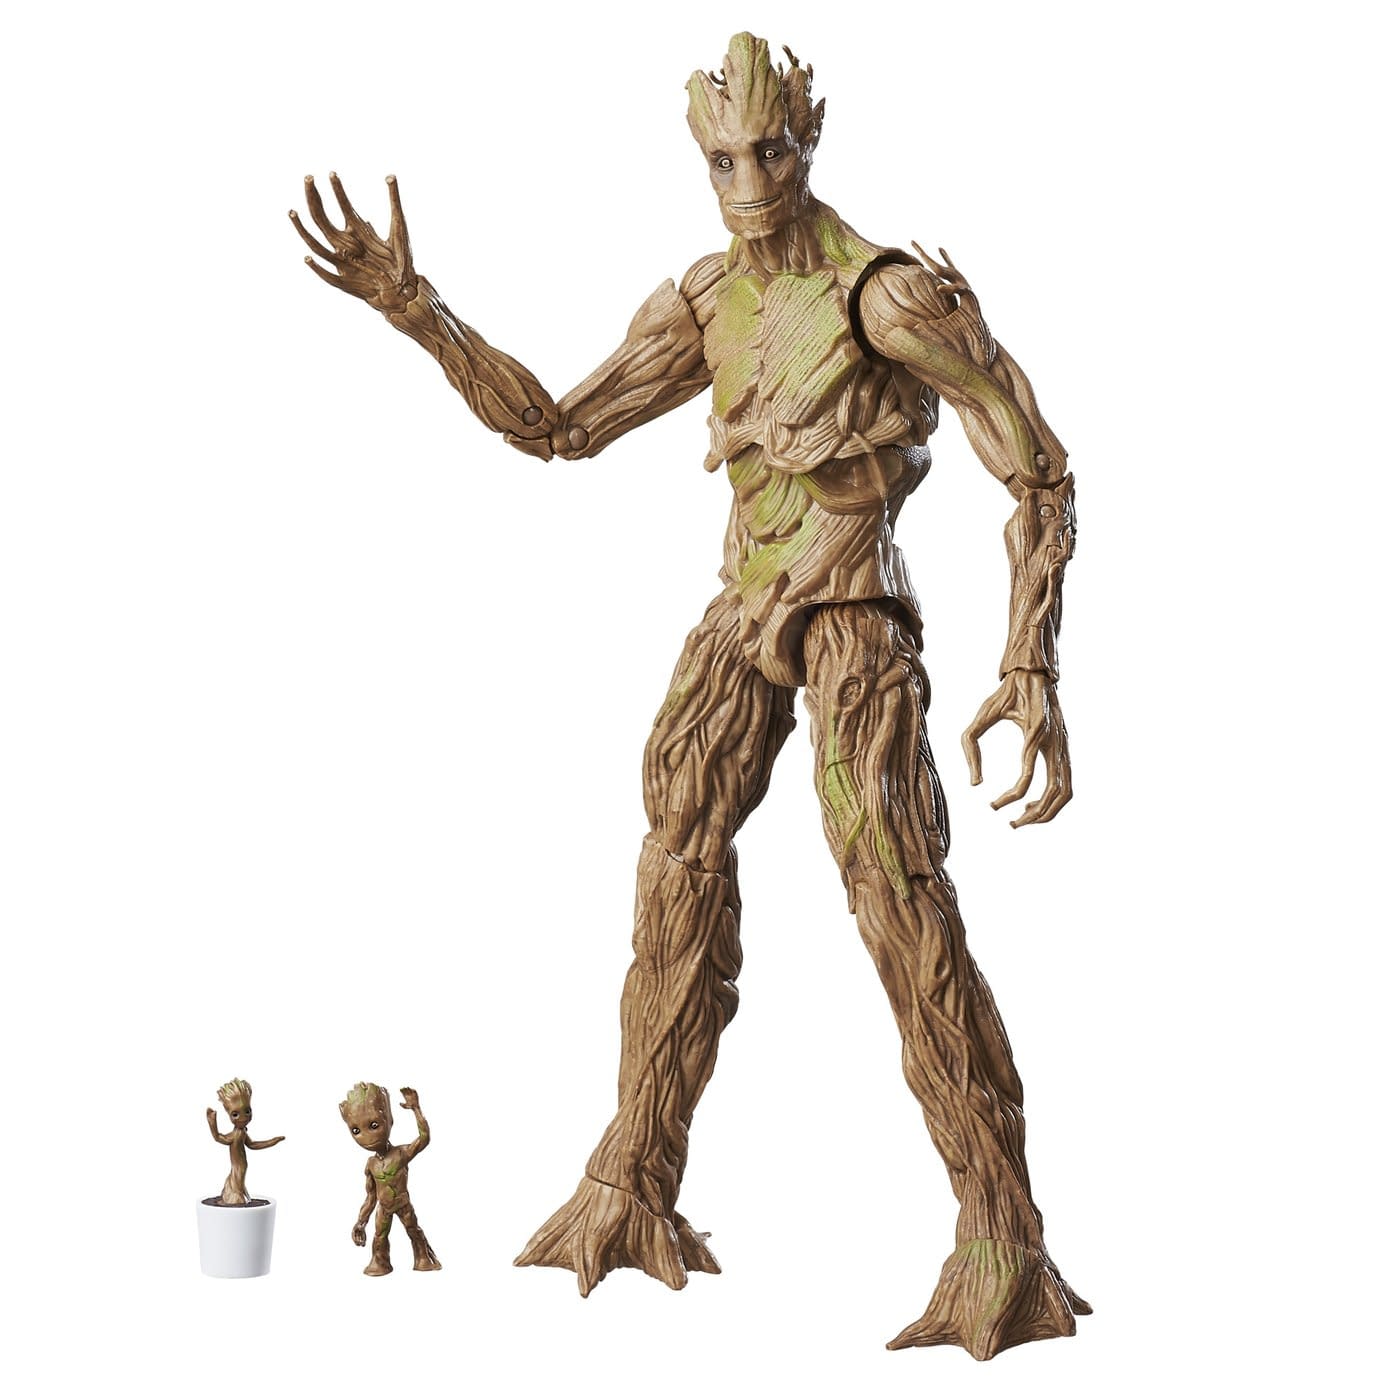 Marvel Legends Groot Evolutions Pack from Hasbro